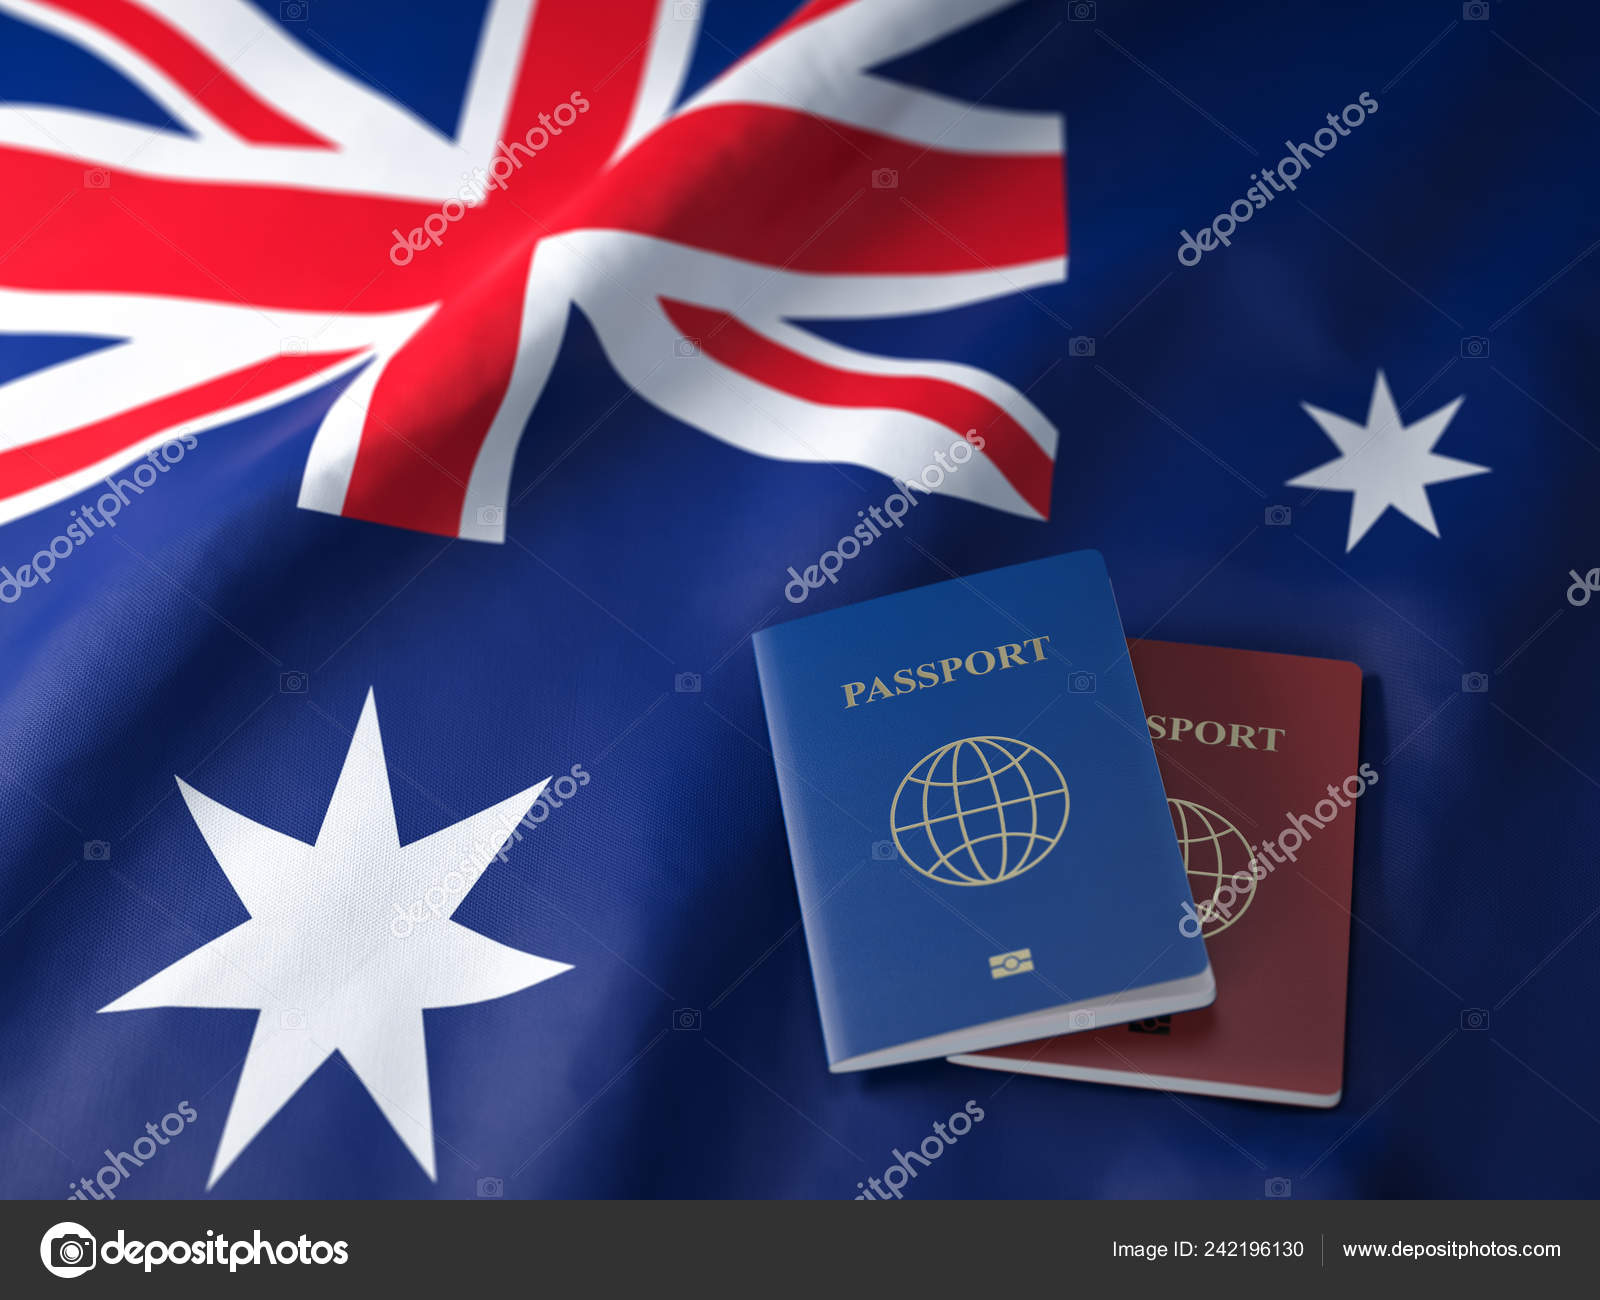 Travel Tousism Immigration Australia Concept Different Passports Australian Flag Stock Photo by 242196130